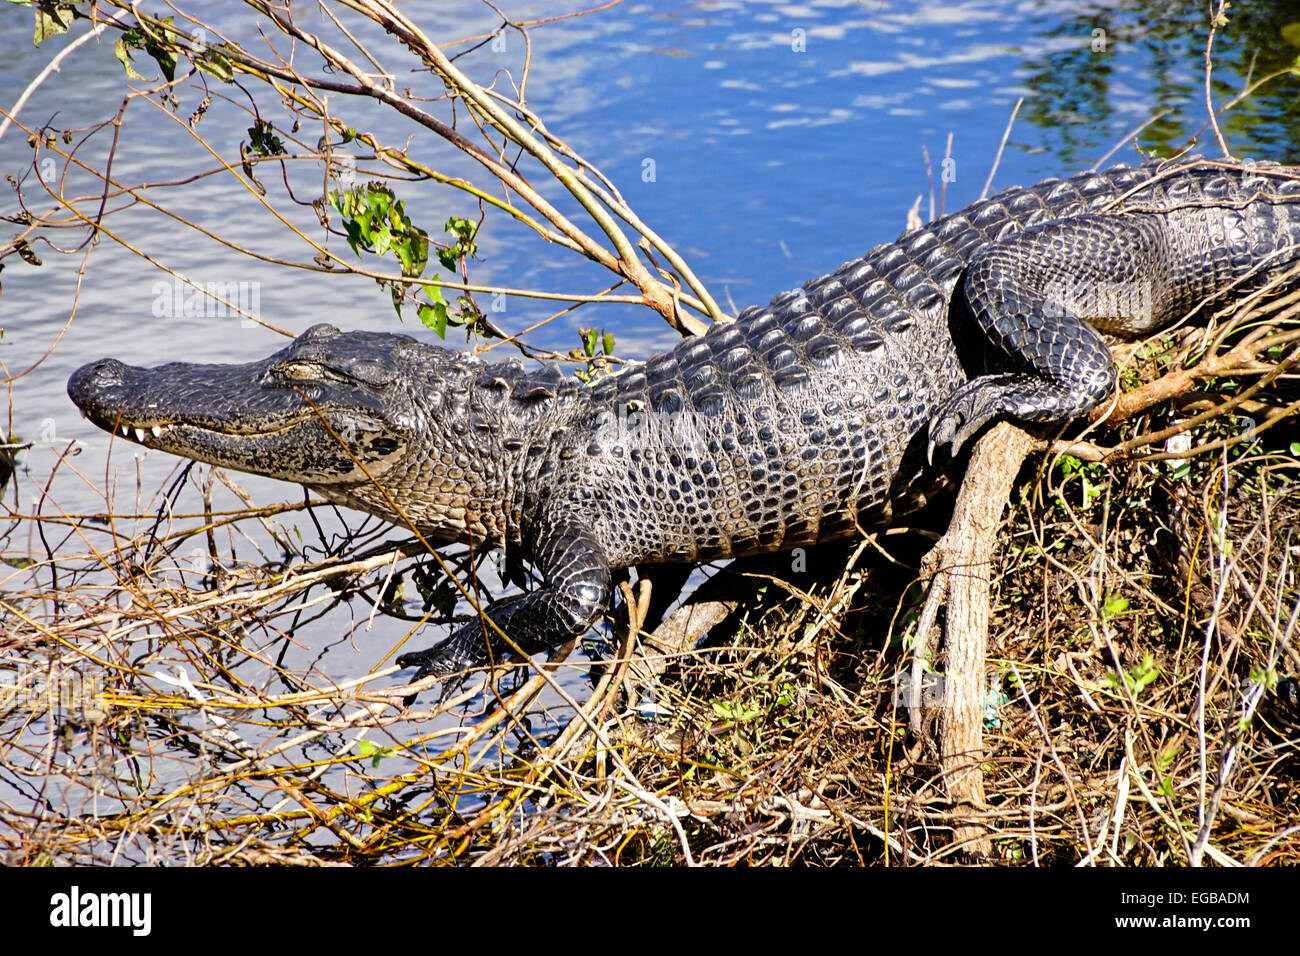 American alligator (alligator mississippiensis) Everglades National Park, Florida. Stock Photo